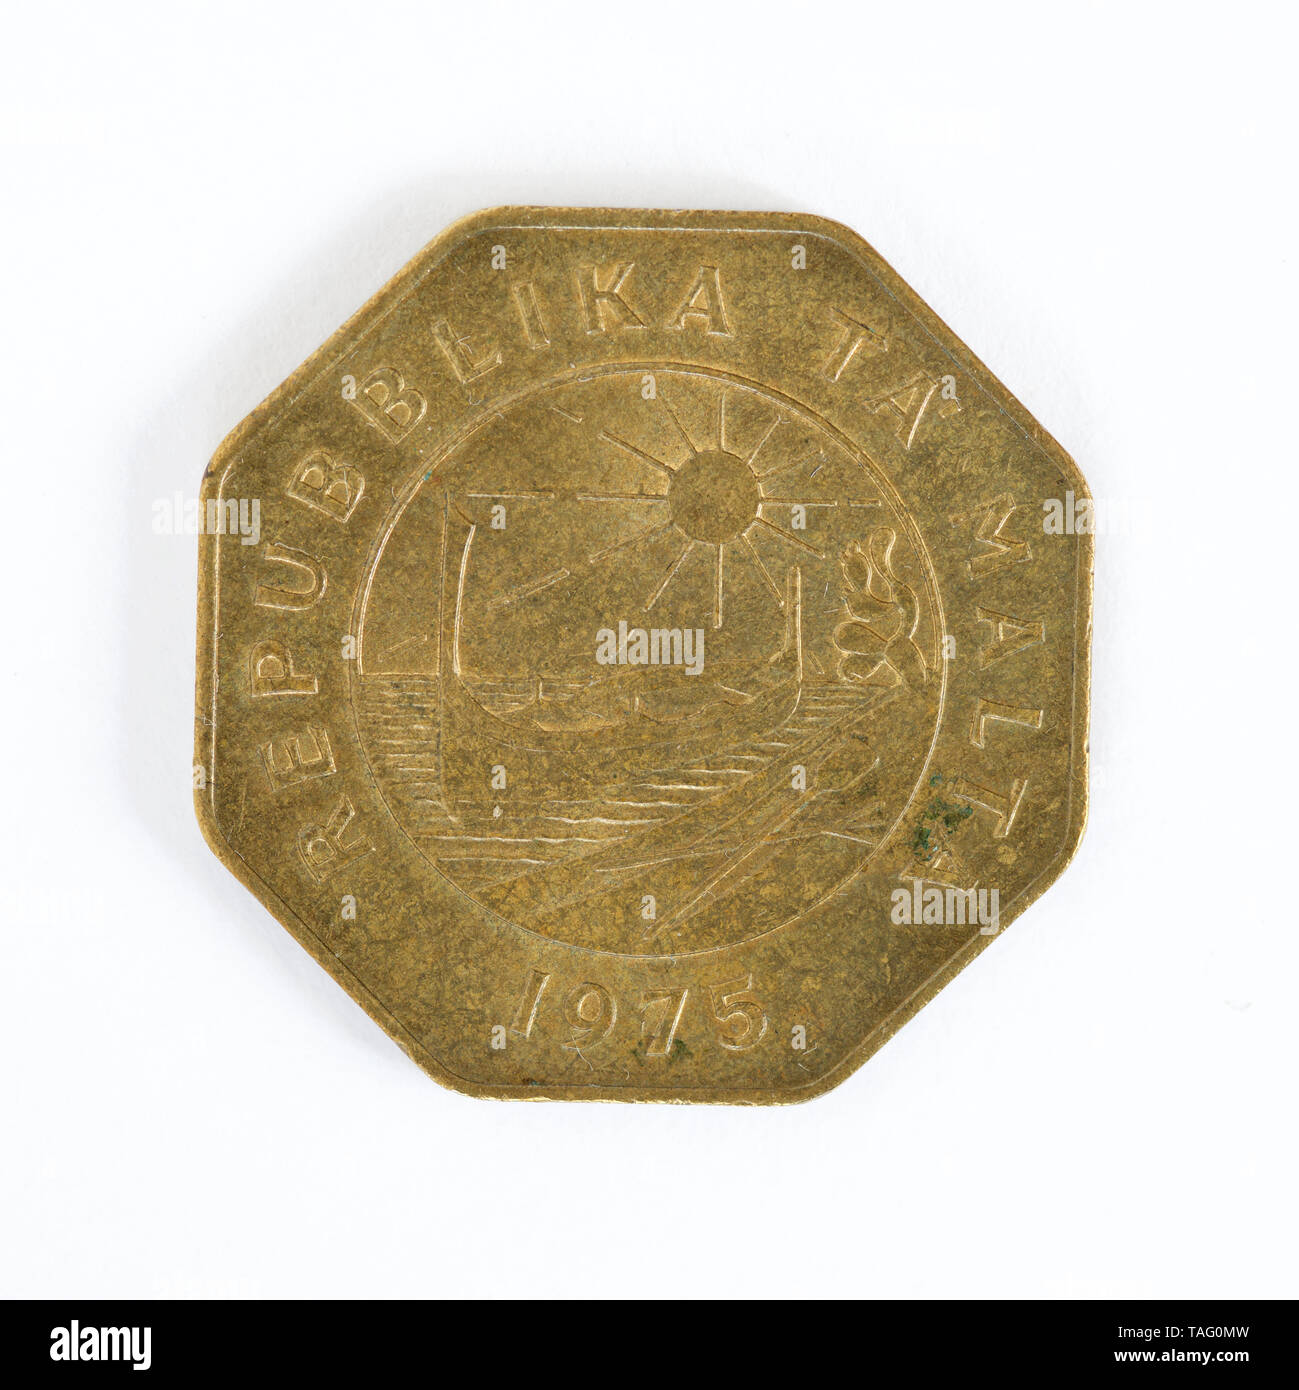 Malta 25 cents coin - 1975 Stock Photo